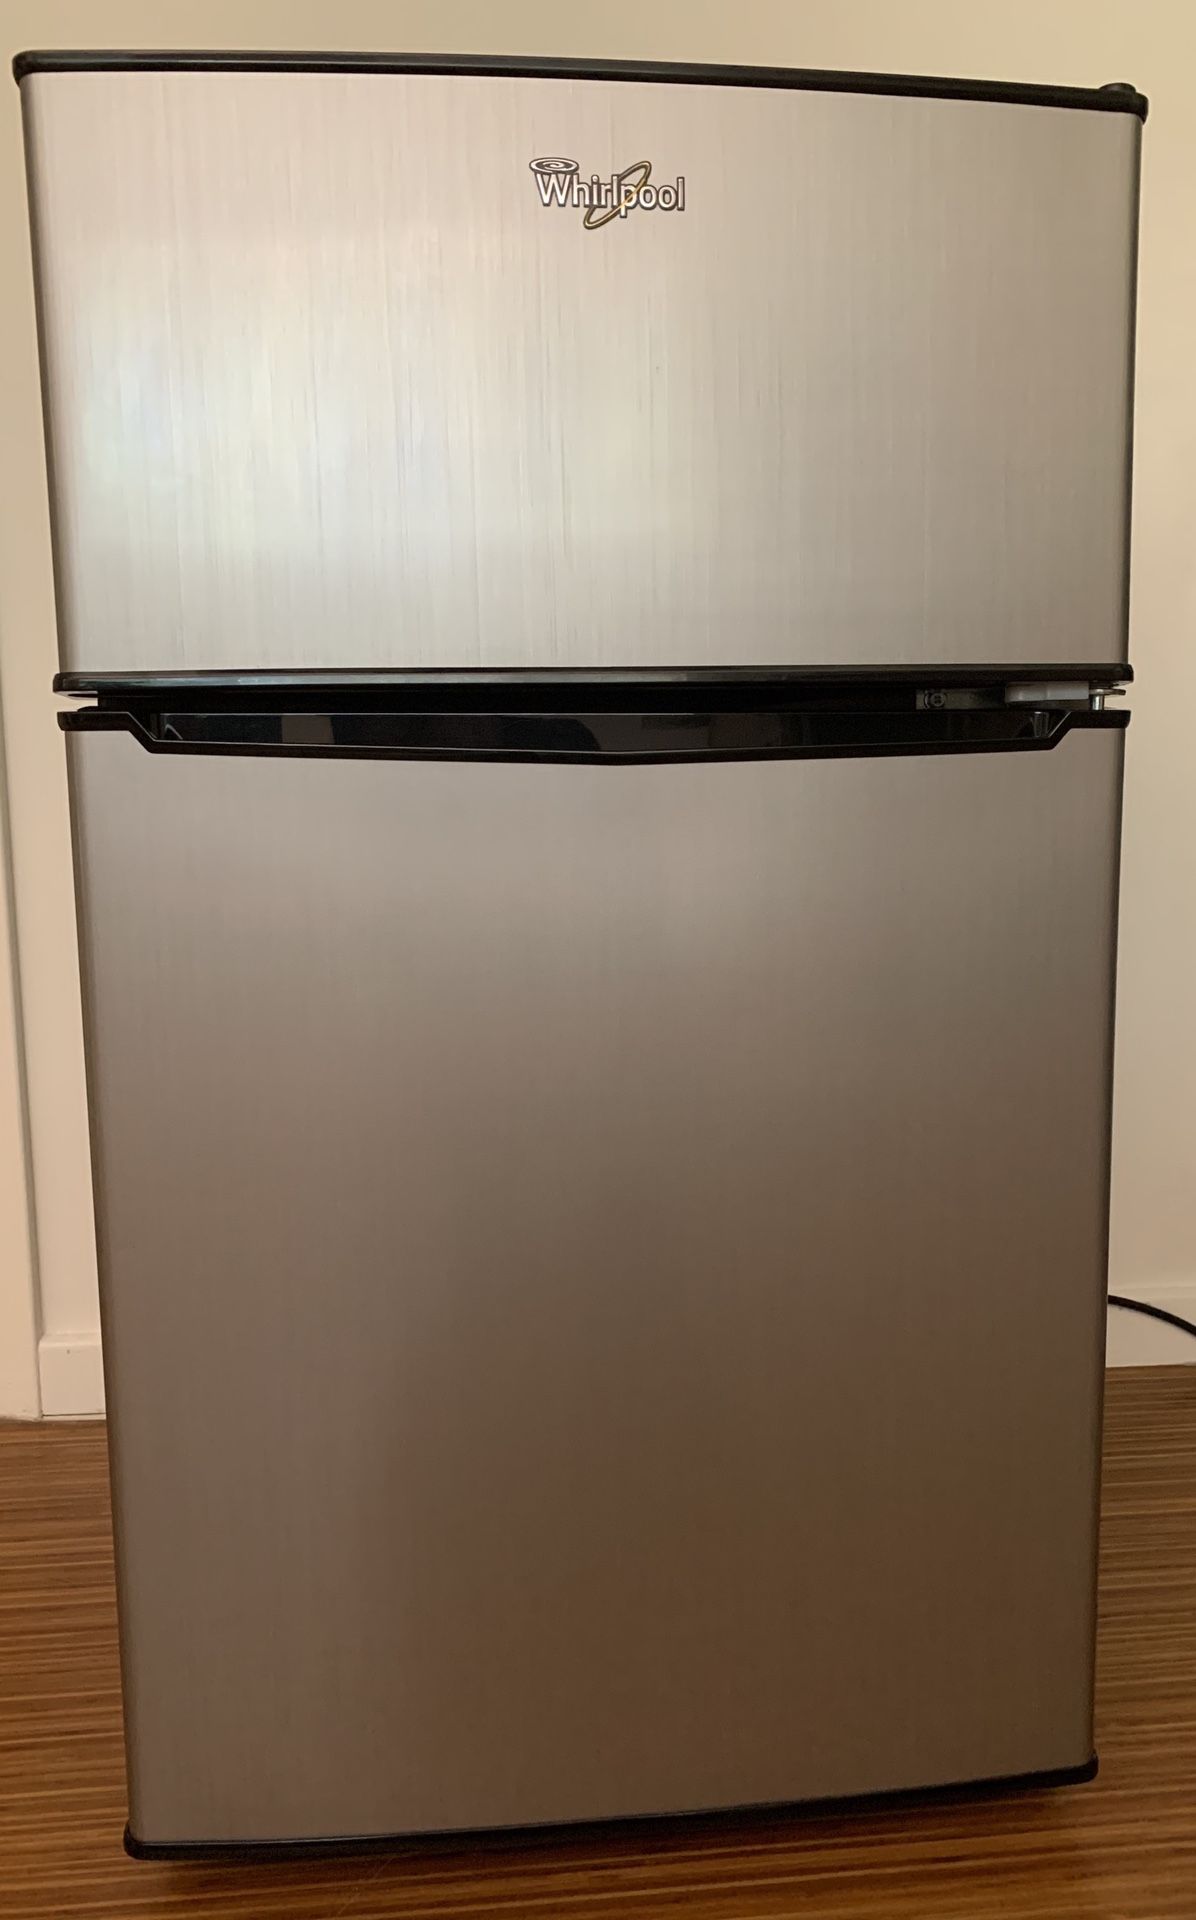 Whirlpool Mini fridge with Freezer